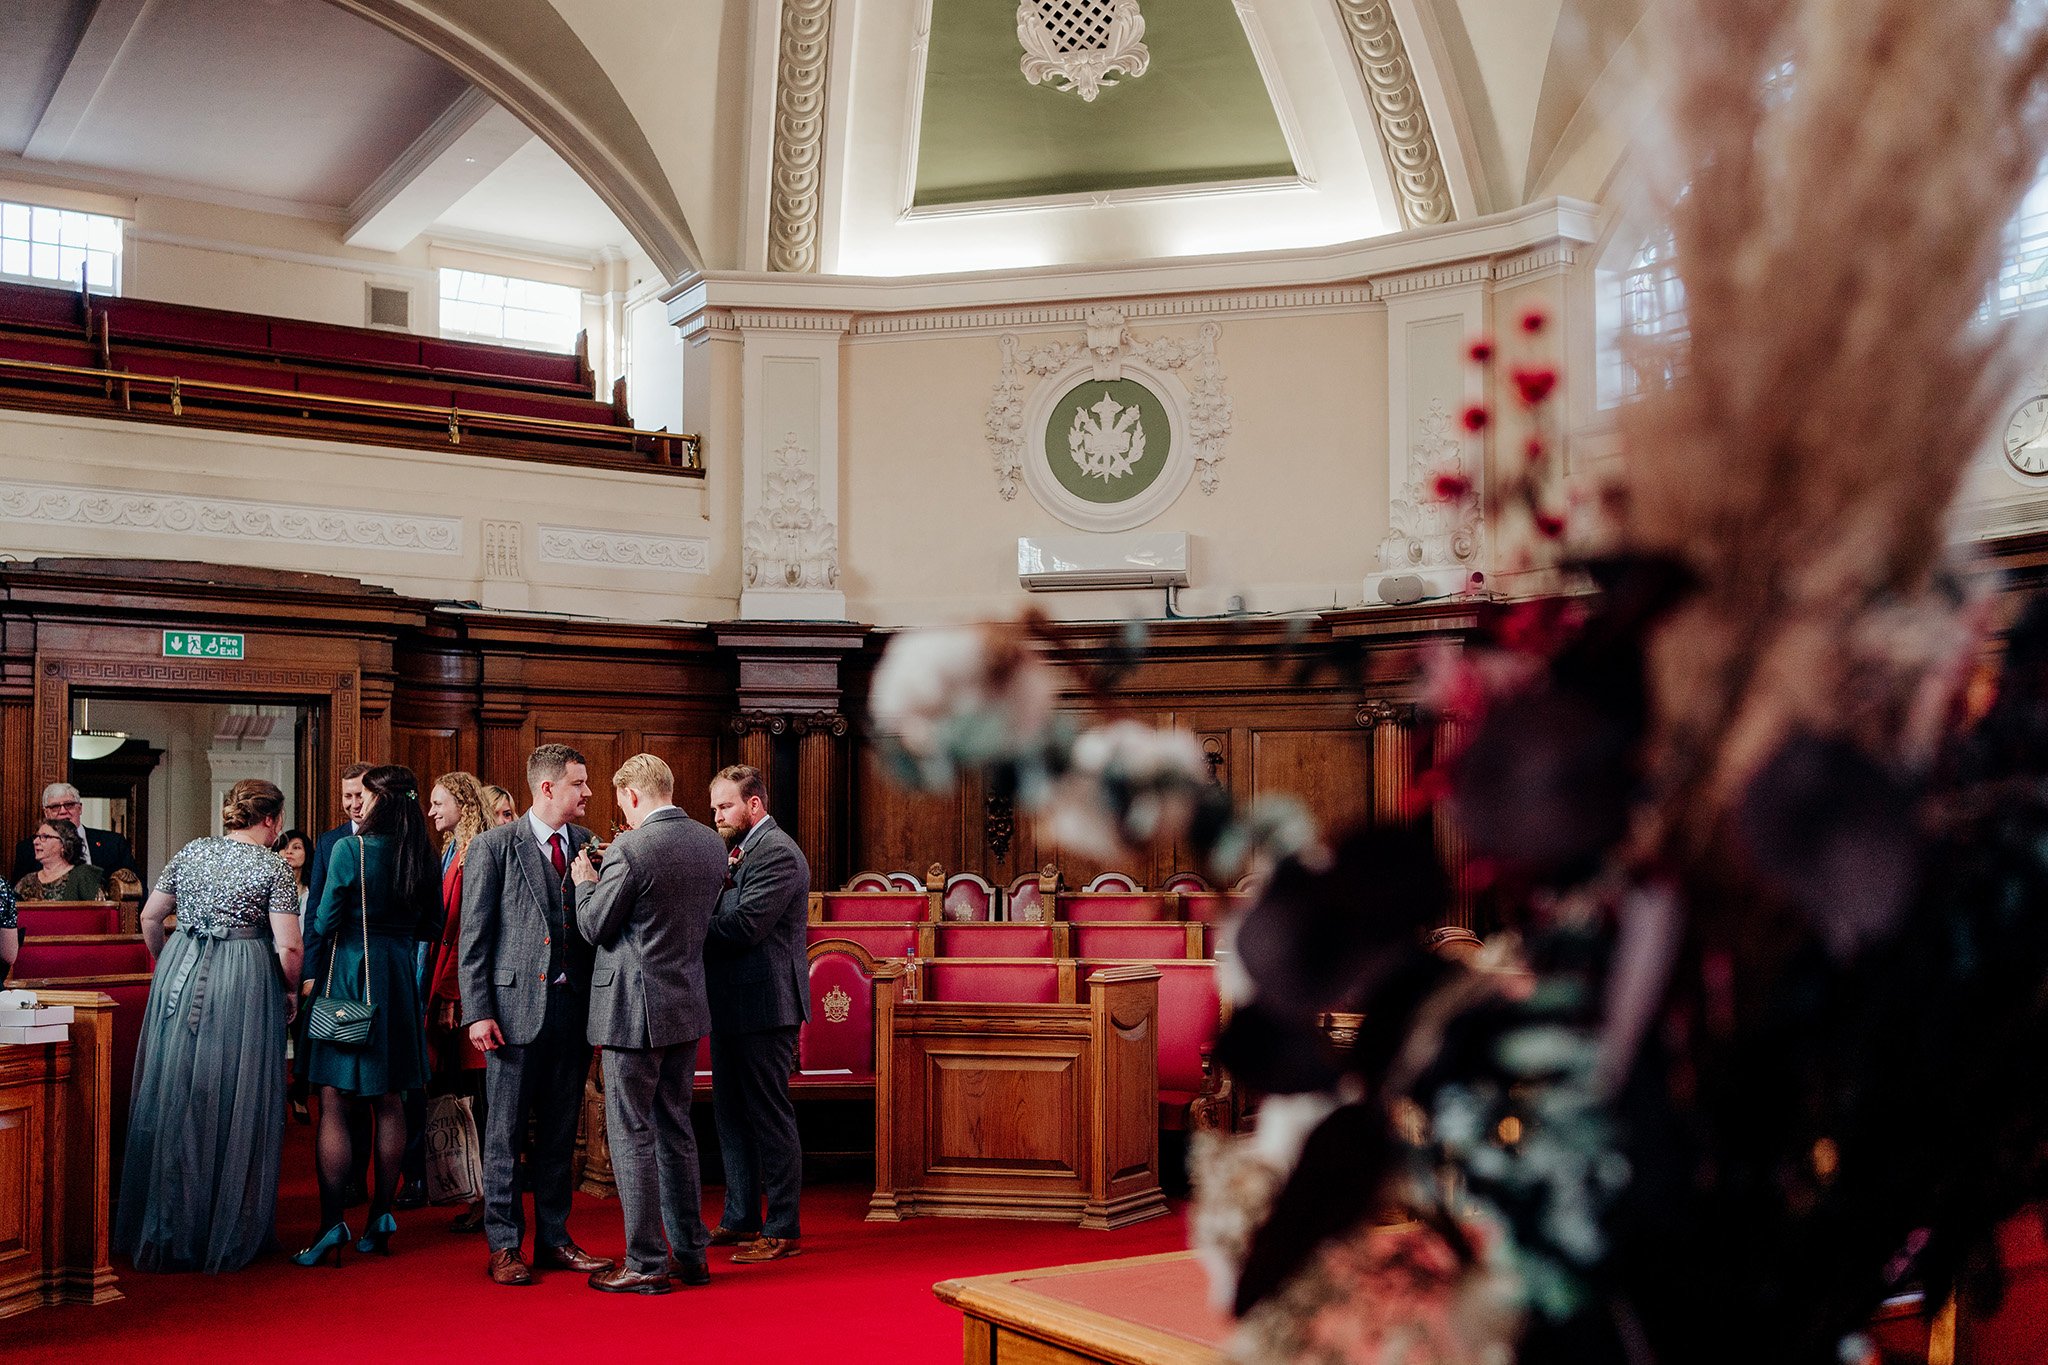 Islington Town Hall wedding photographer